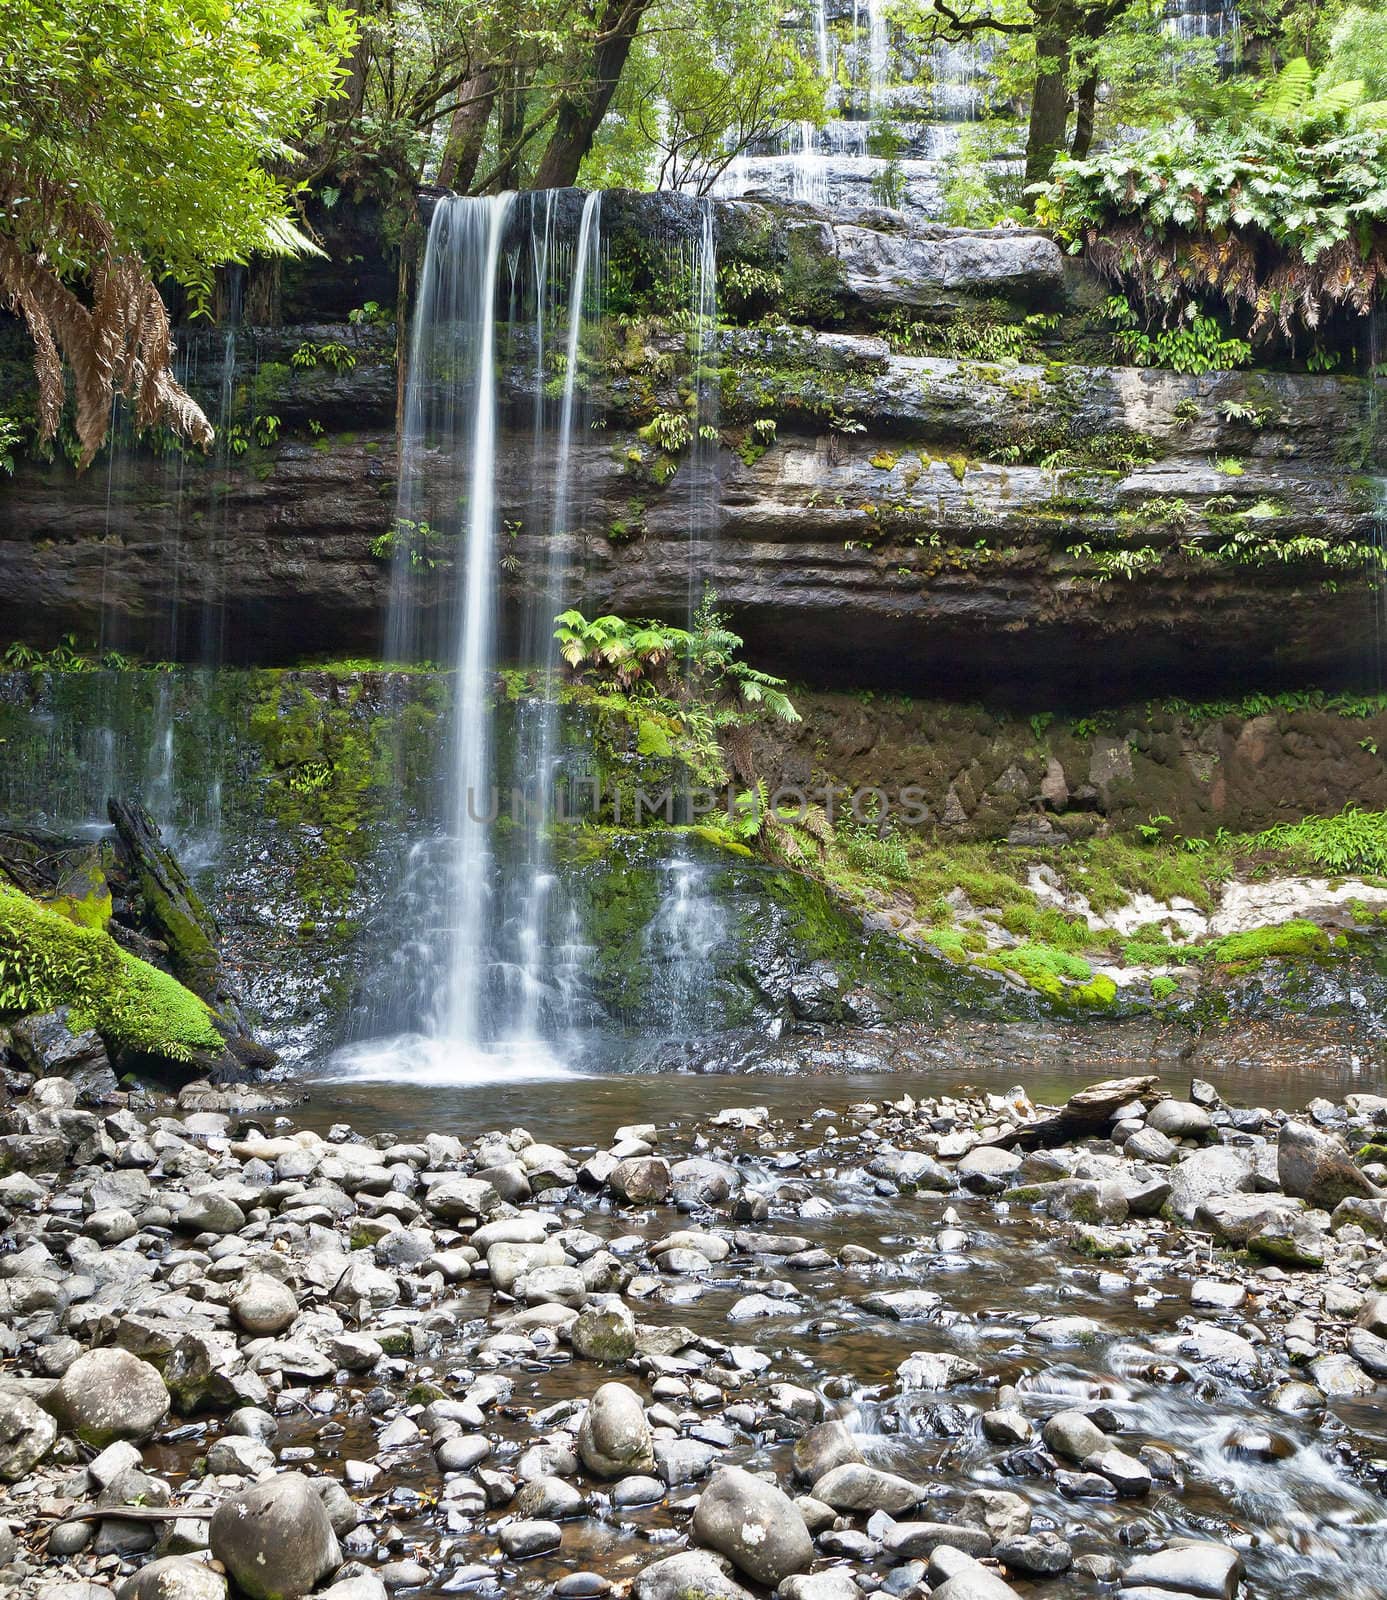 An image of a beautiful waterfall in Australia